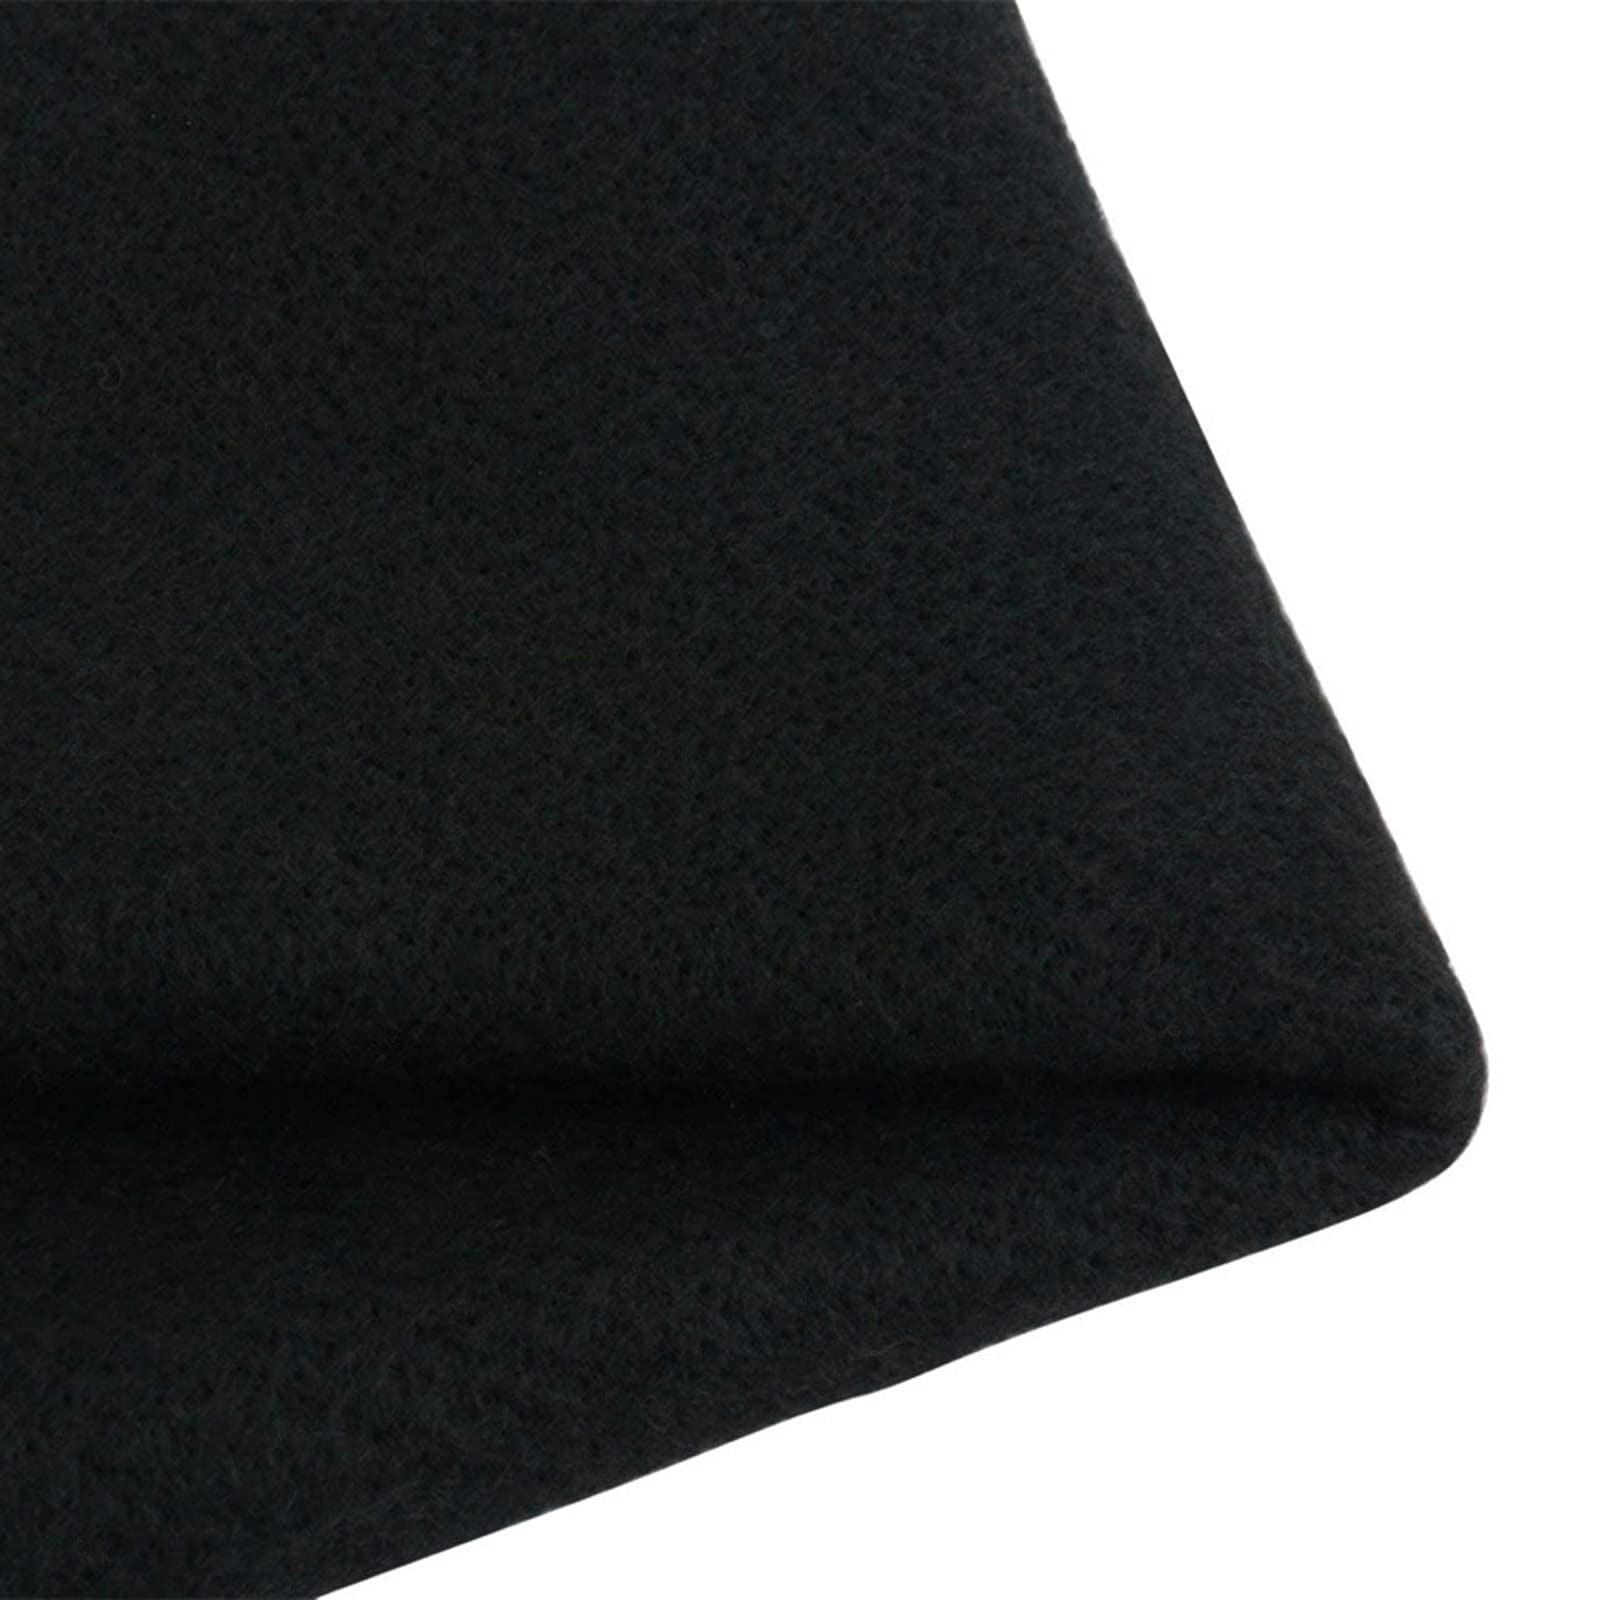 T-HOT High Temp Felt Carbon Fiber Welding Blanket Black Flame Resistant High Heat Fabric Mat Pad for Soldering Welder 12x12inch/36x36inch Insulated Welding Blanket Fireproof